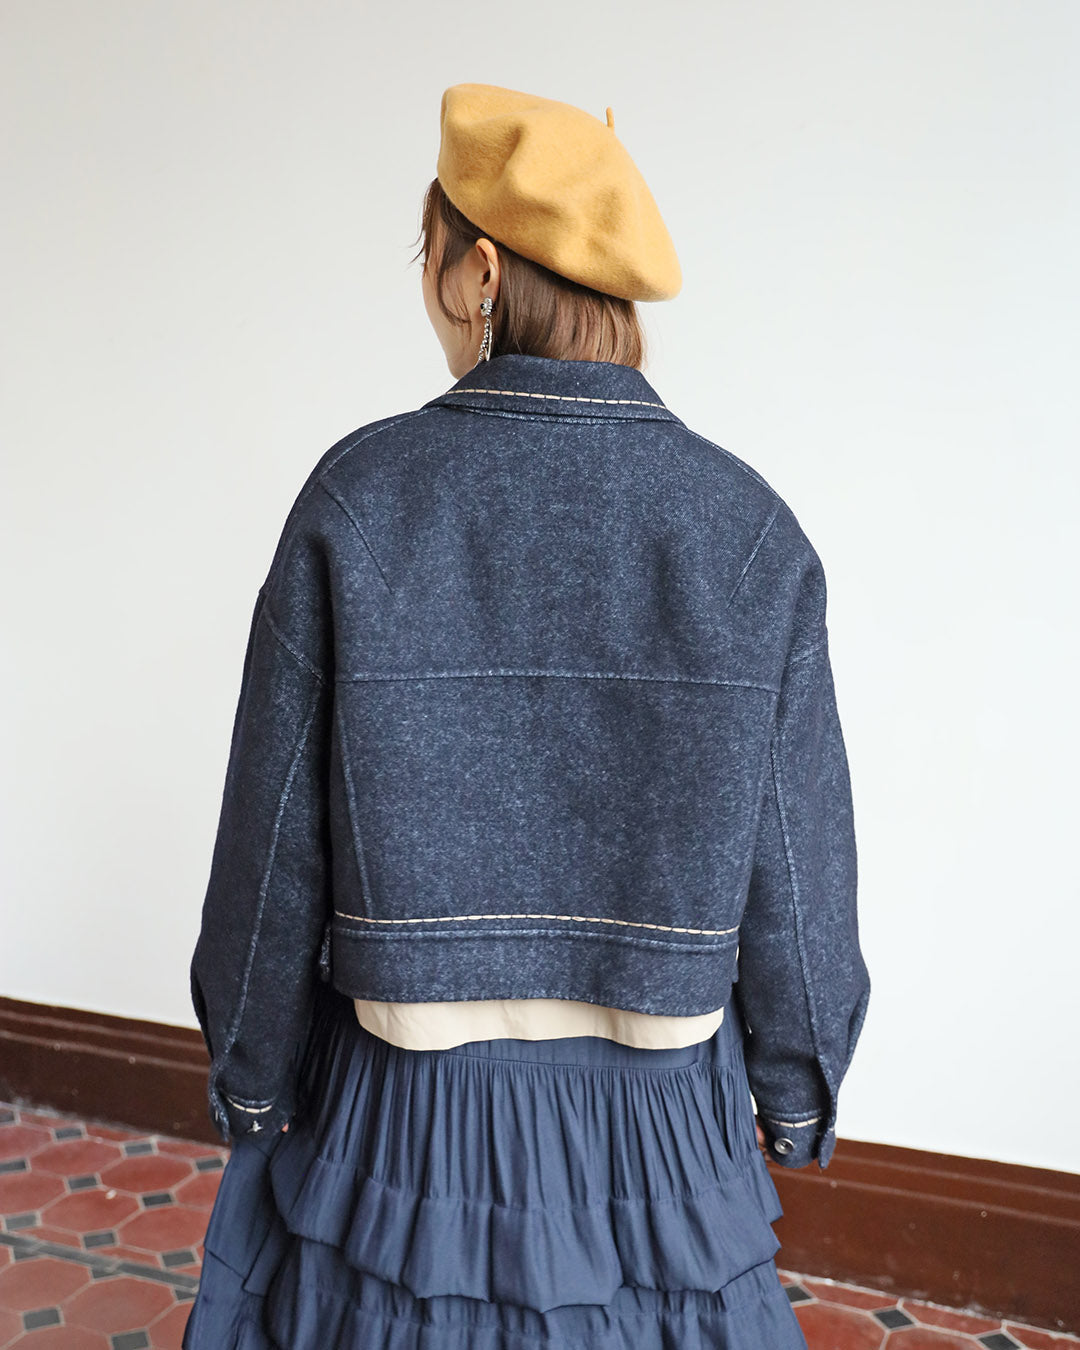 Contrast Stitch Wool Jacket w/ Shirt Layer